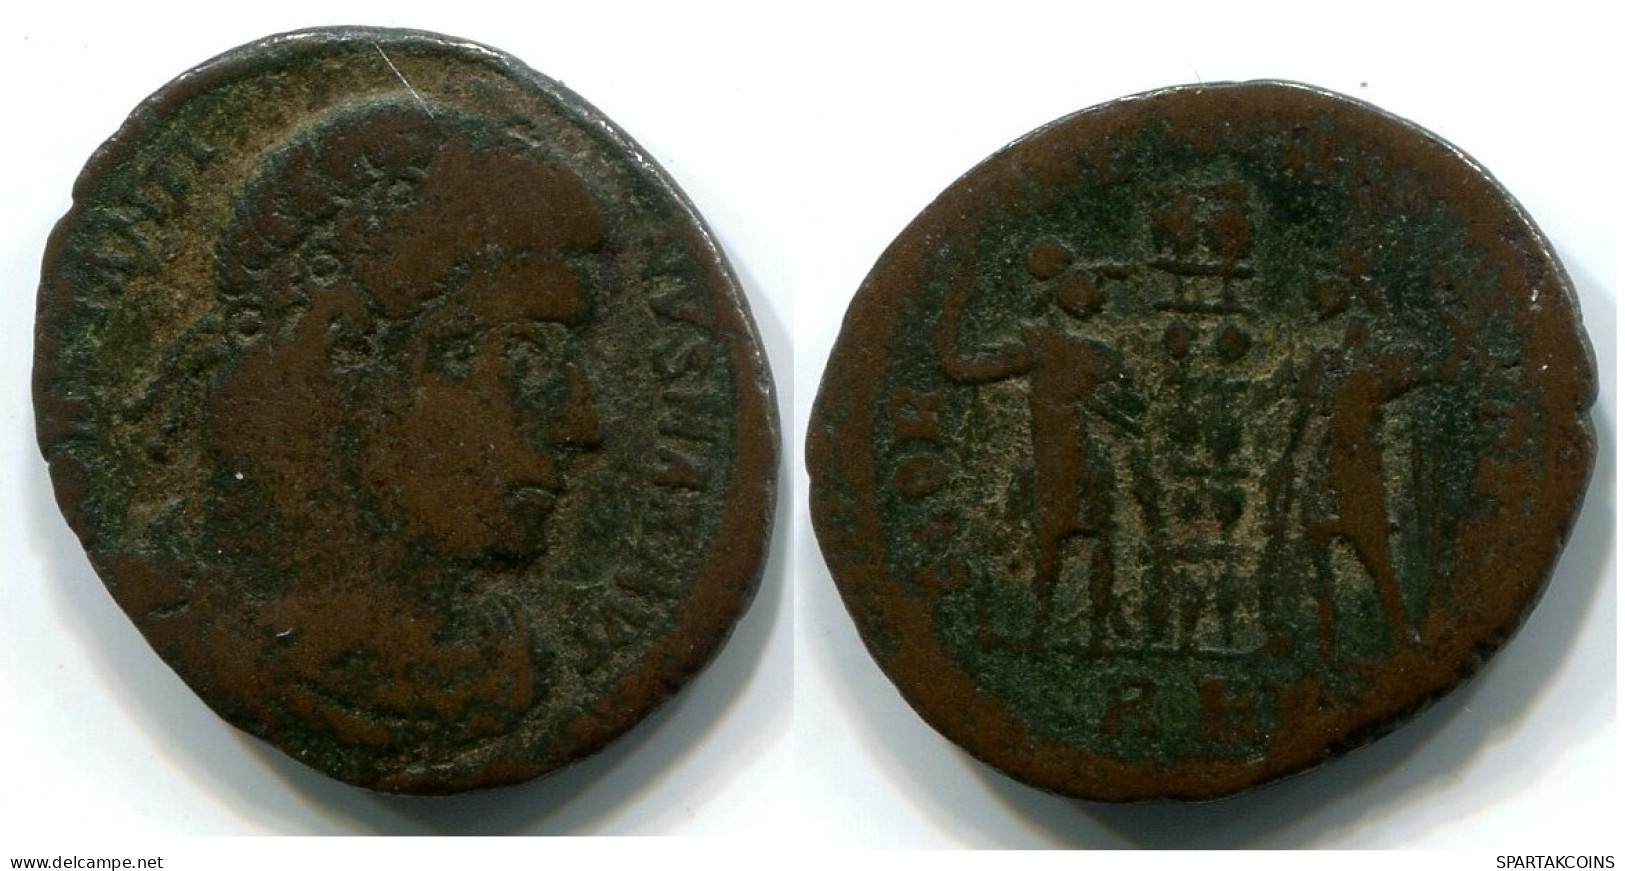 CONSTANTINE I Follis Treveri Mint 321 GLORIA EXERCITVS Two Sold. #ANC12445.16.U.A - El Impero Christiano (307 / 363)